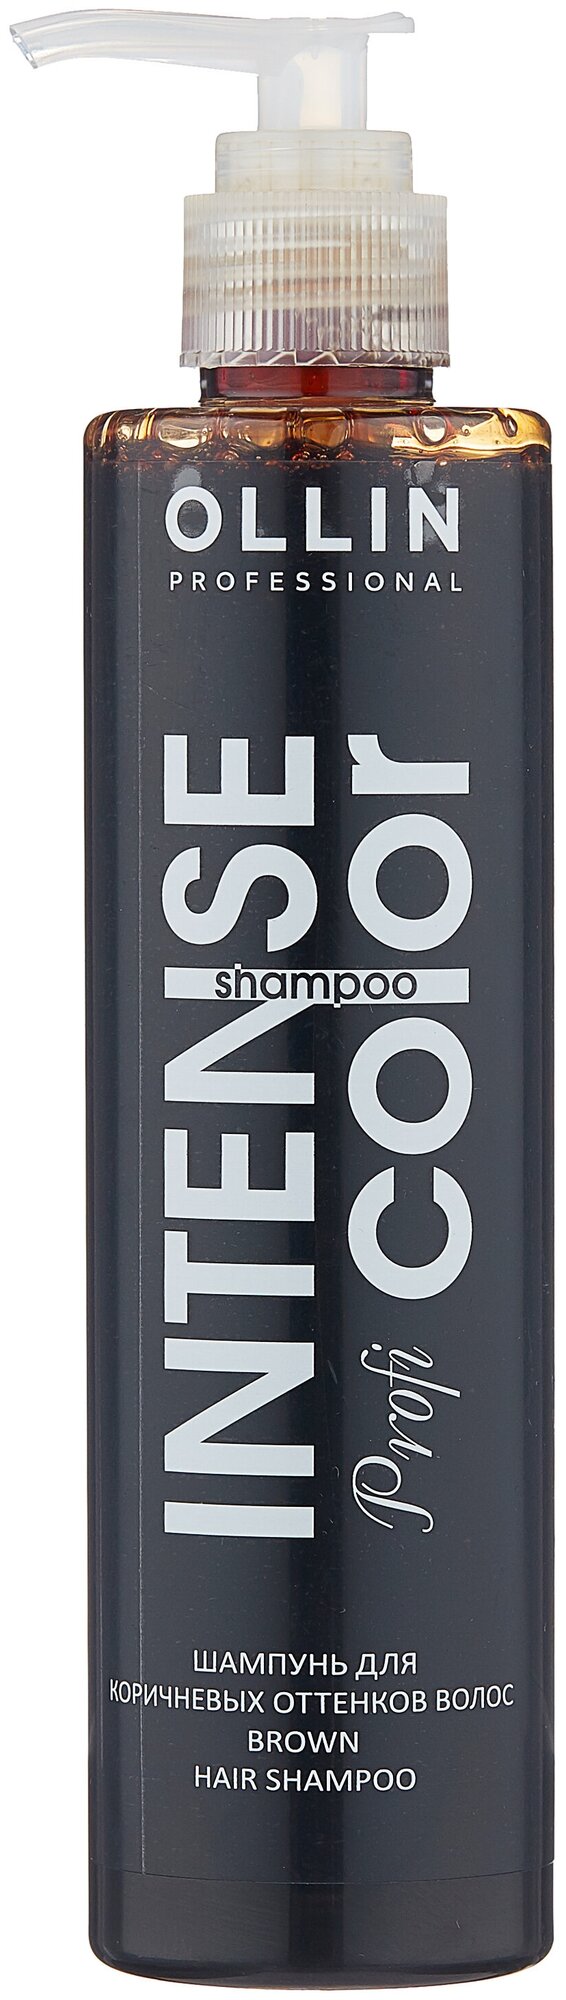 OLLIN INTENSE Profi COLOR Шампунь для коричневых оттенков волос 250мл/Brown hair shampoo